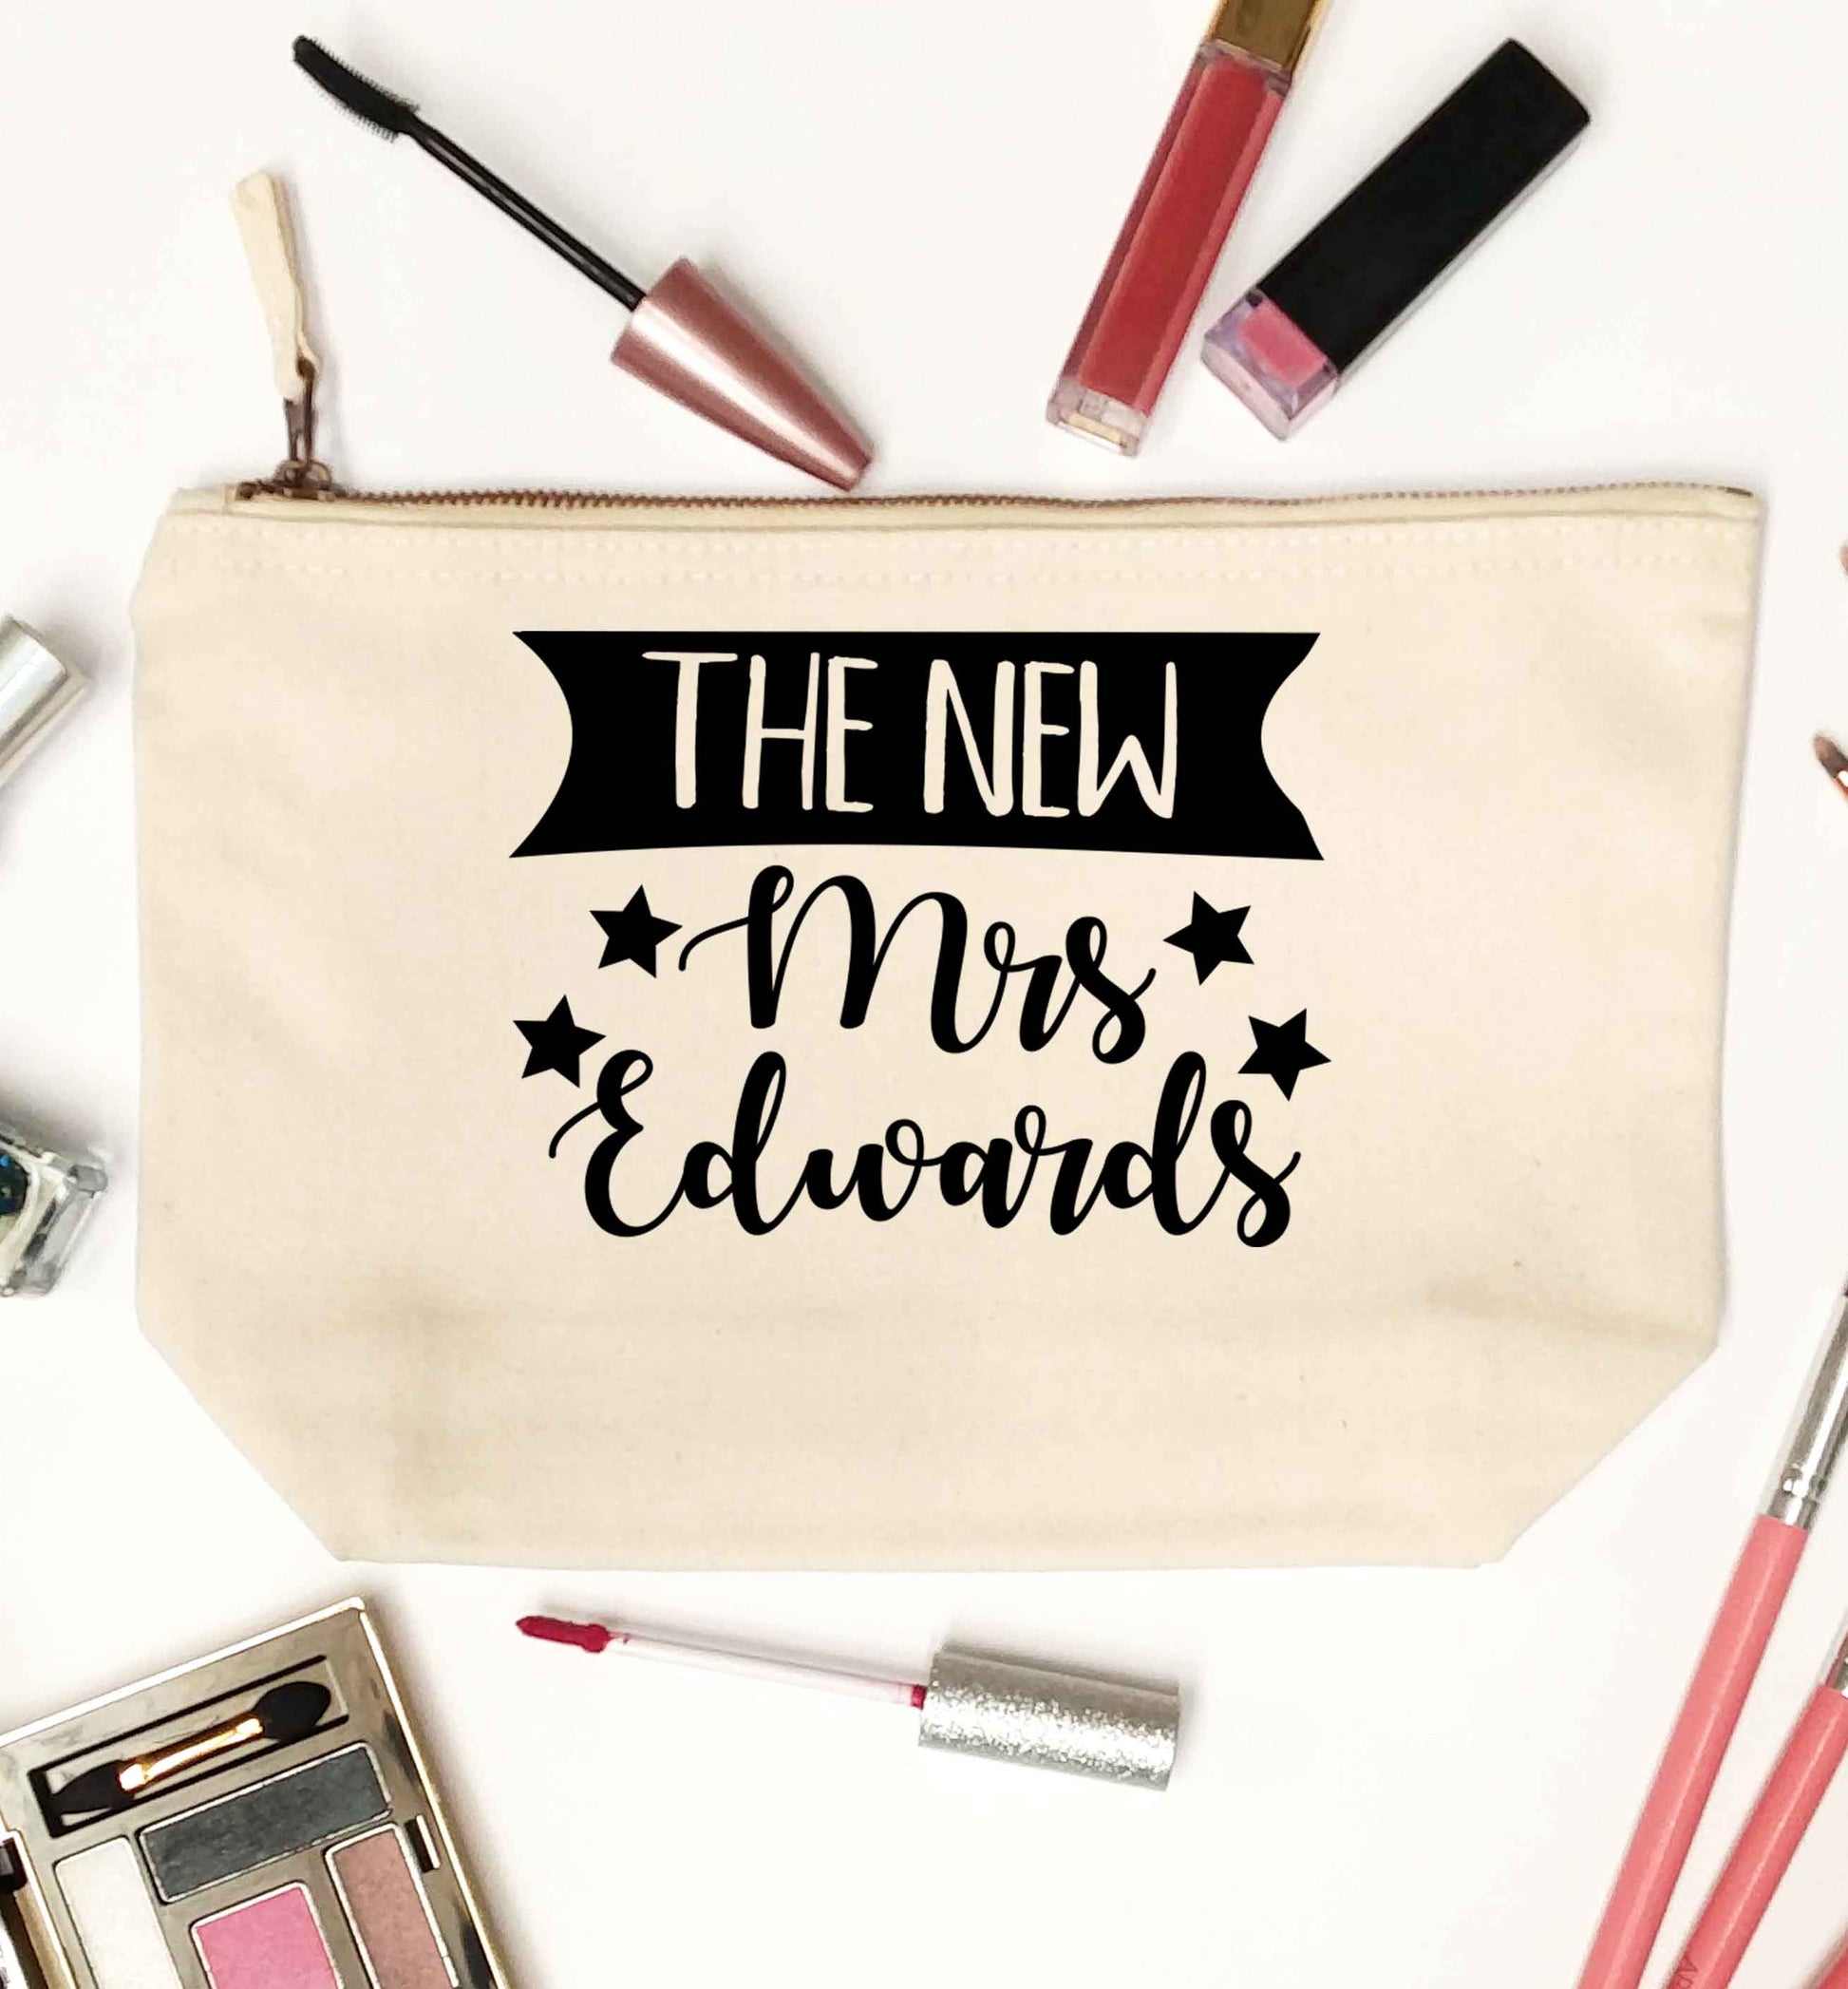 Introducing the new Mrs personalised natural makeup bag